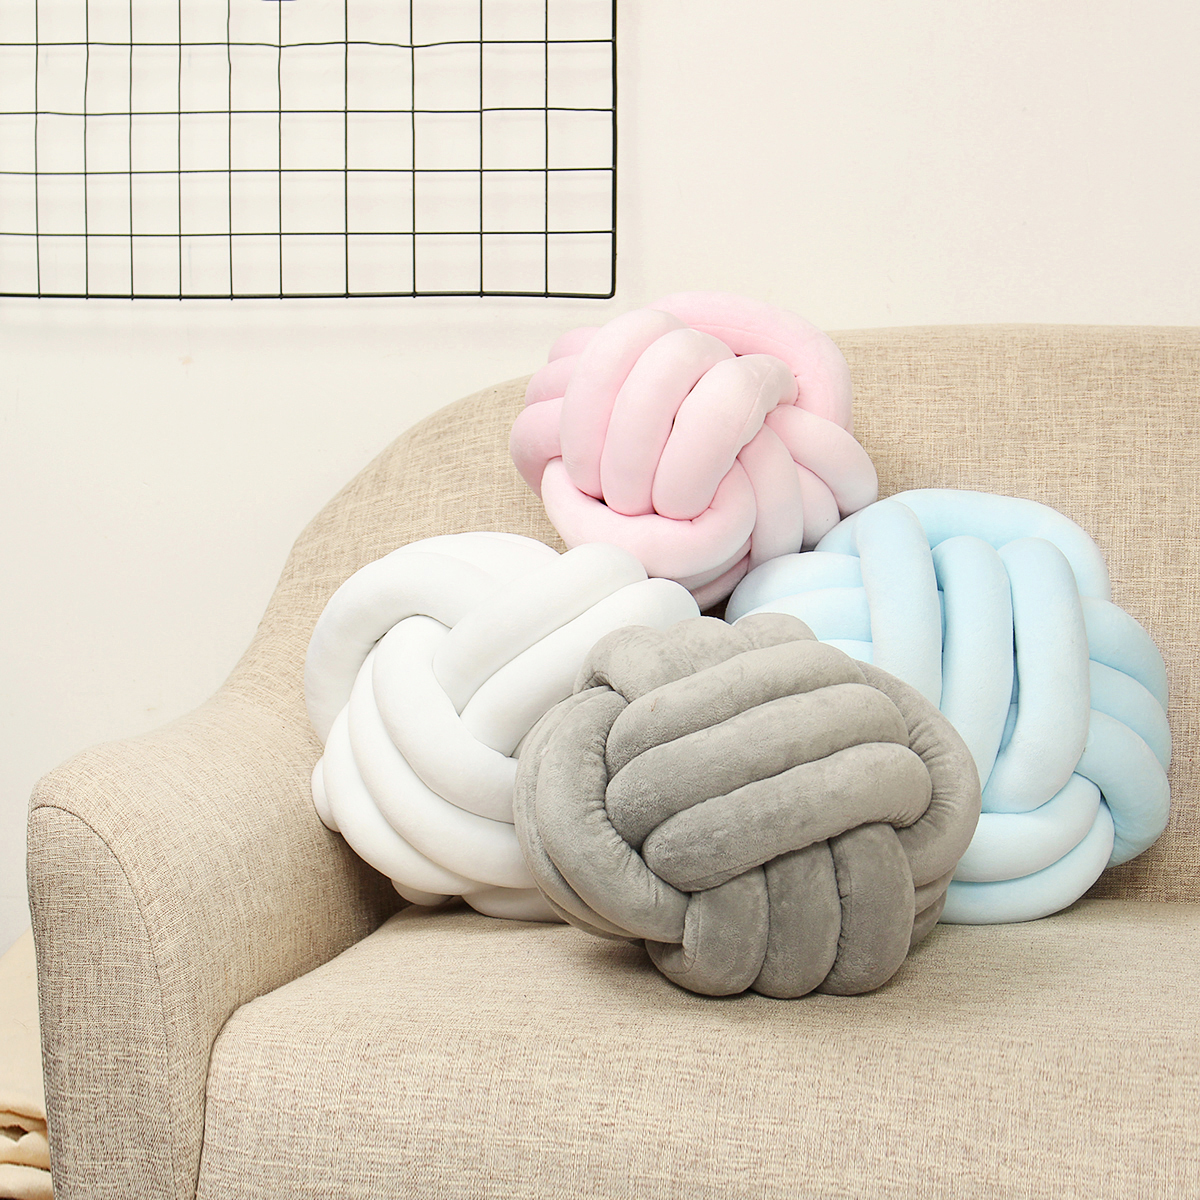 10-12-Soft-Knot-Pillow-Sofa-Cushion-Round-Ball-Plush-Pillow-Home-Car-Decorations-1362305-1